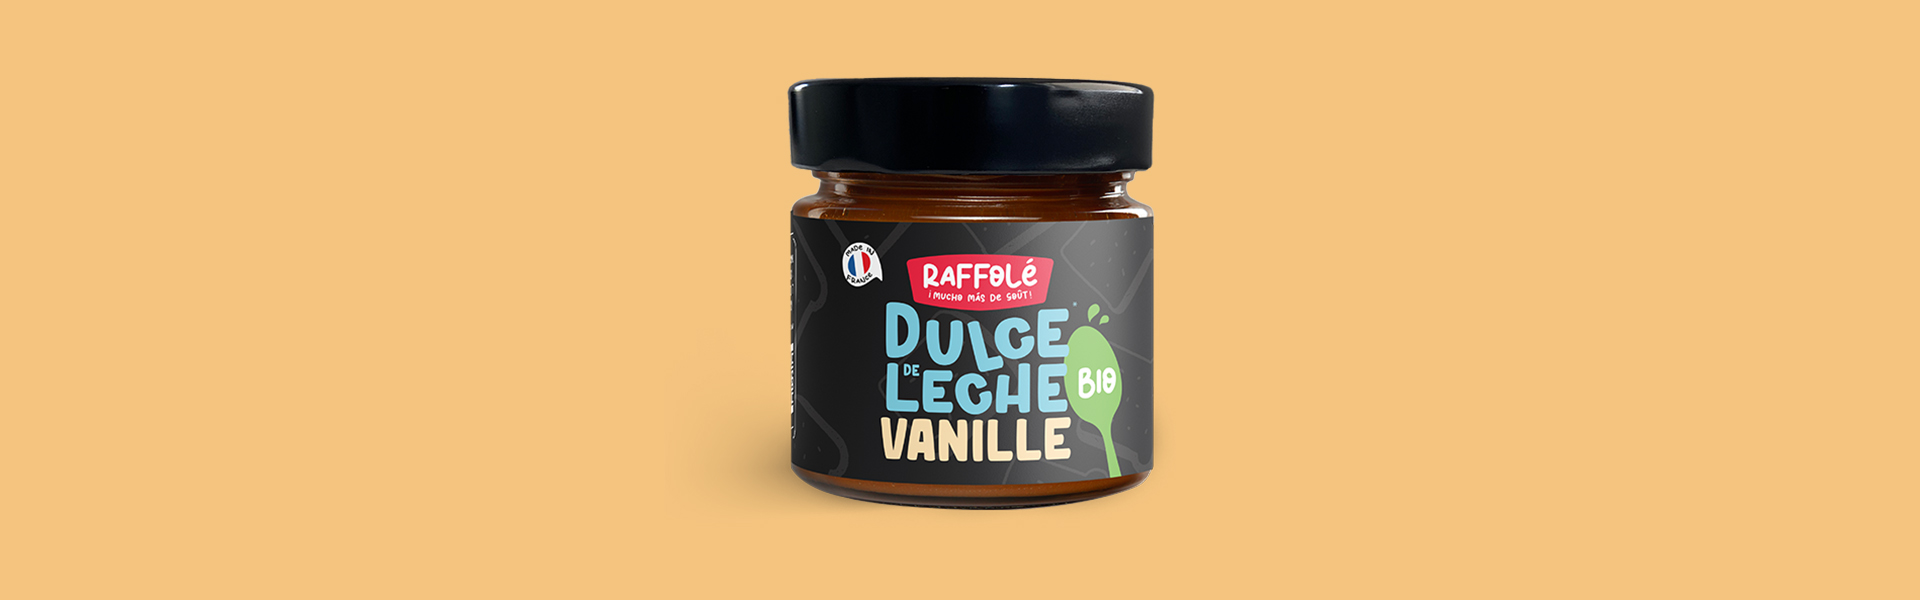 Raffolé-slide-pot-dulce-de-leche-vanille